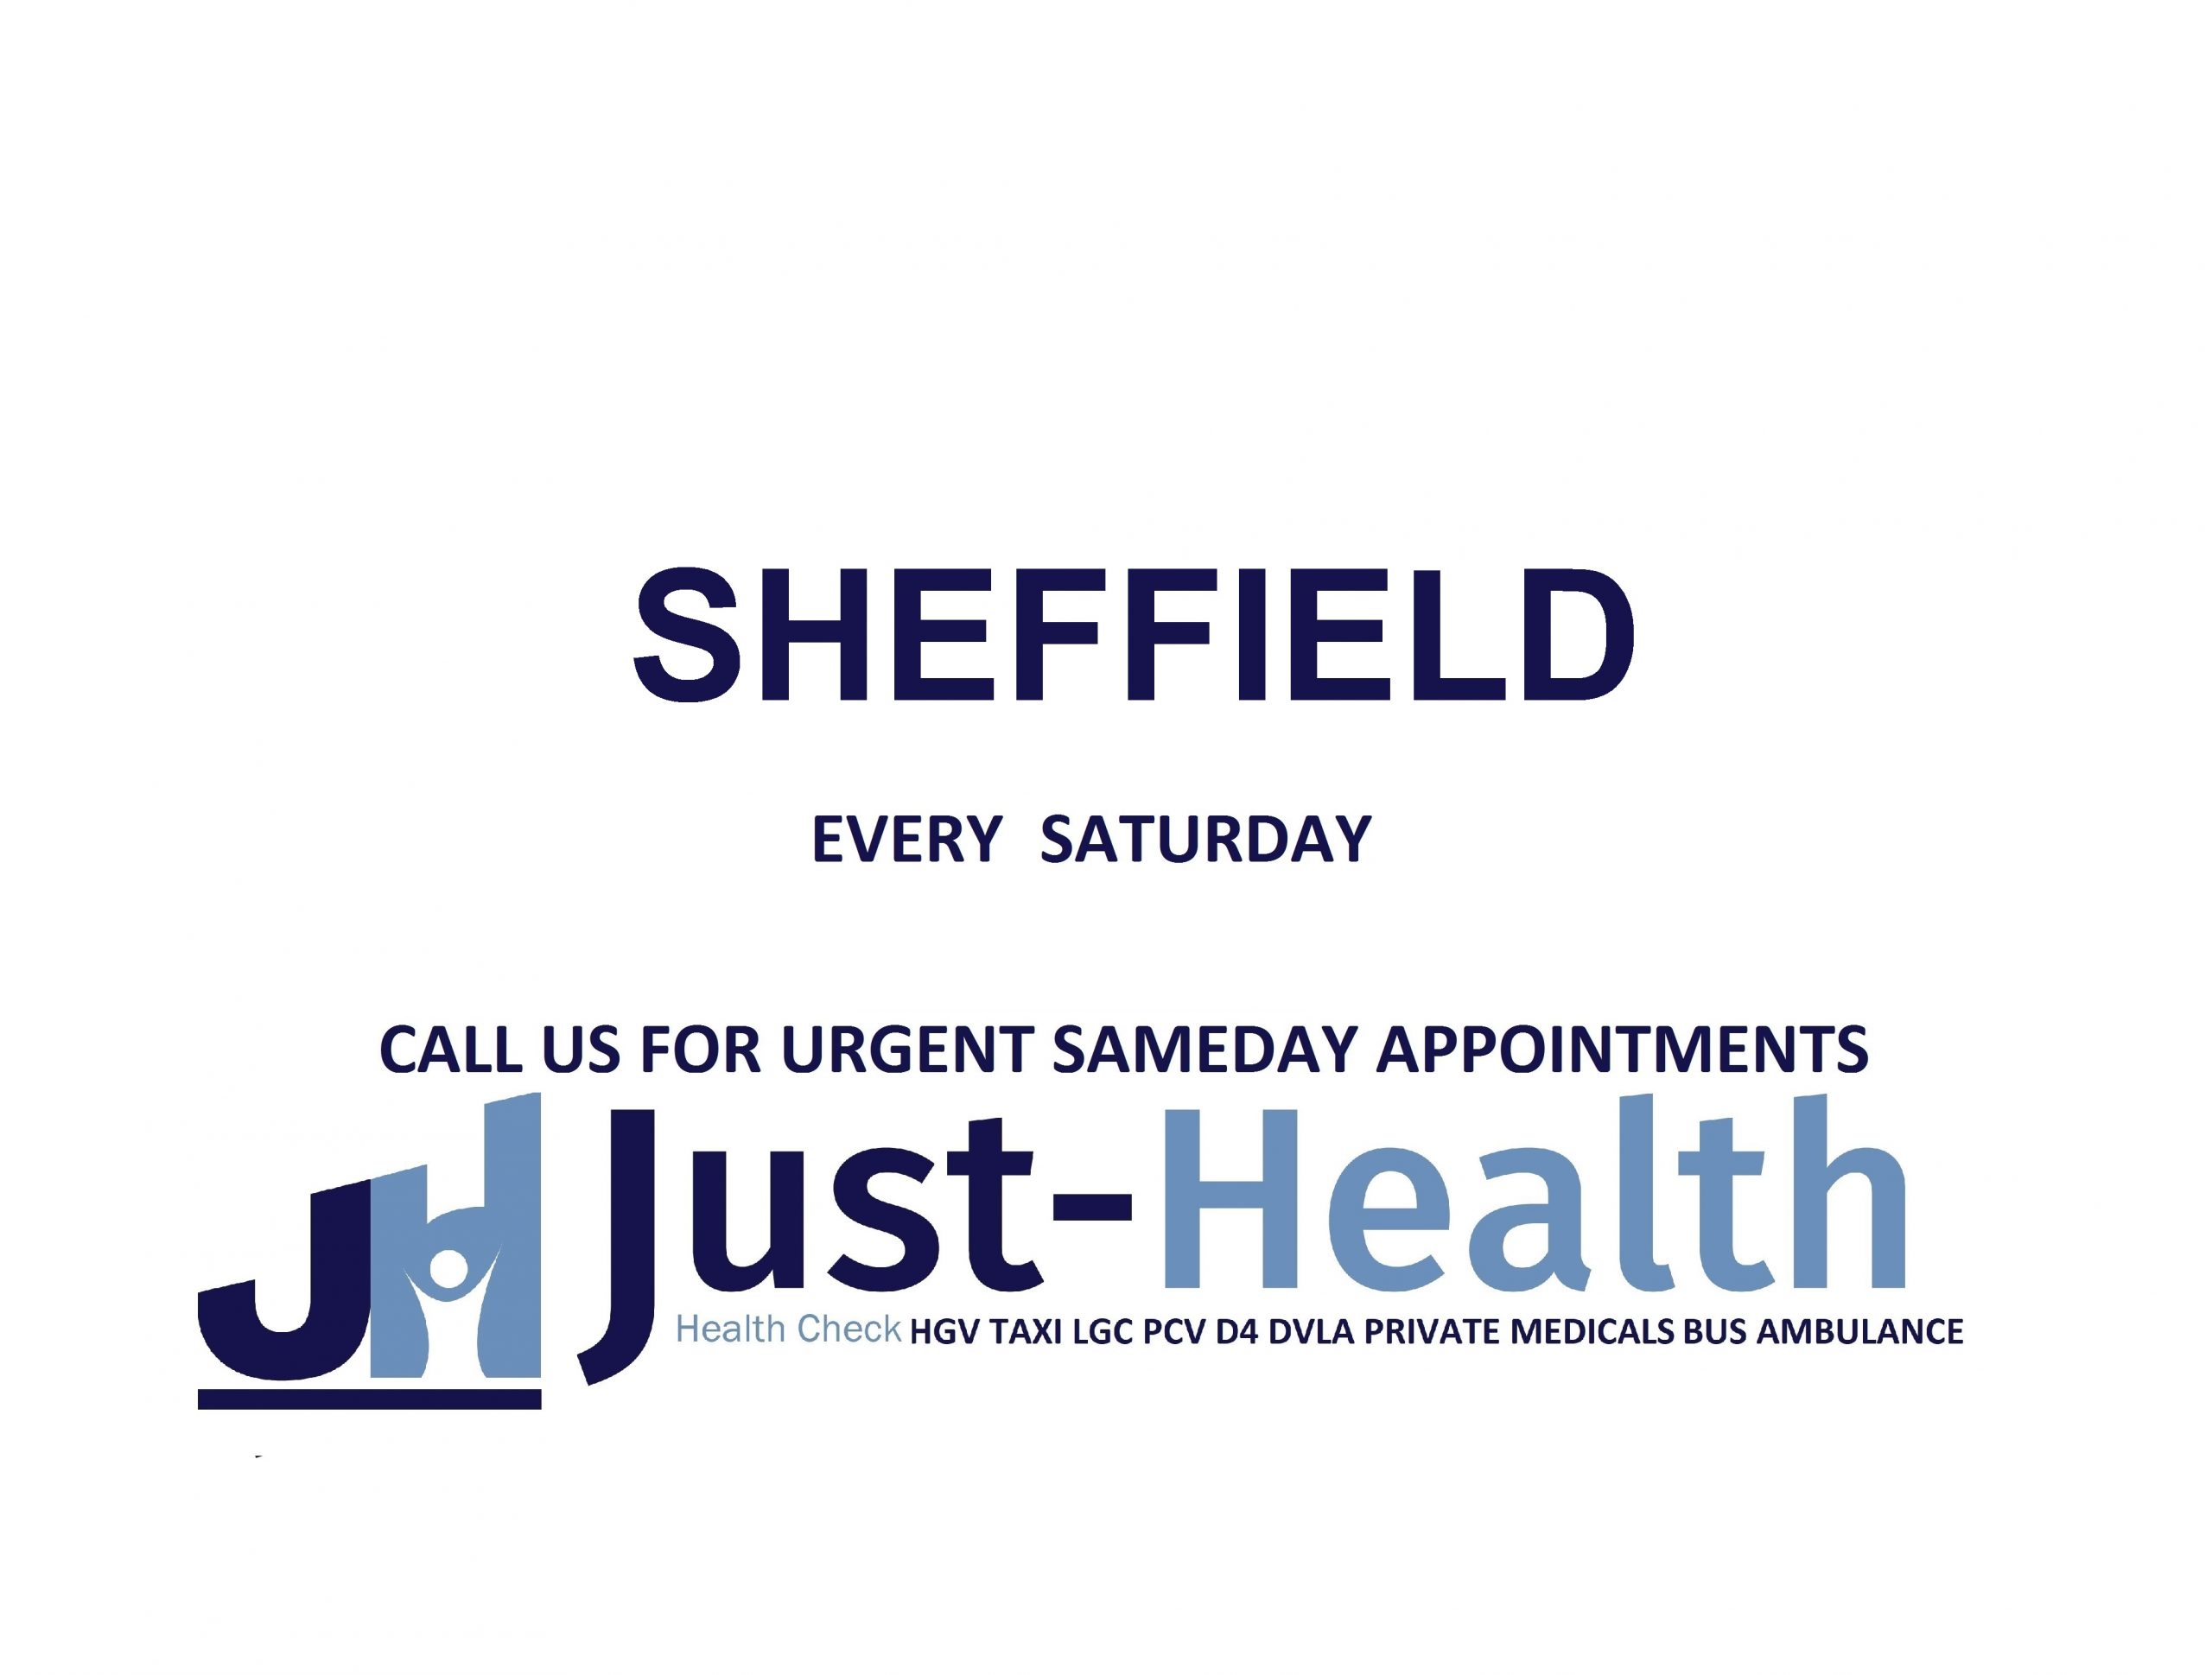 JUST HEALTH Sheffield D4 HGv Medical Driver Medicals